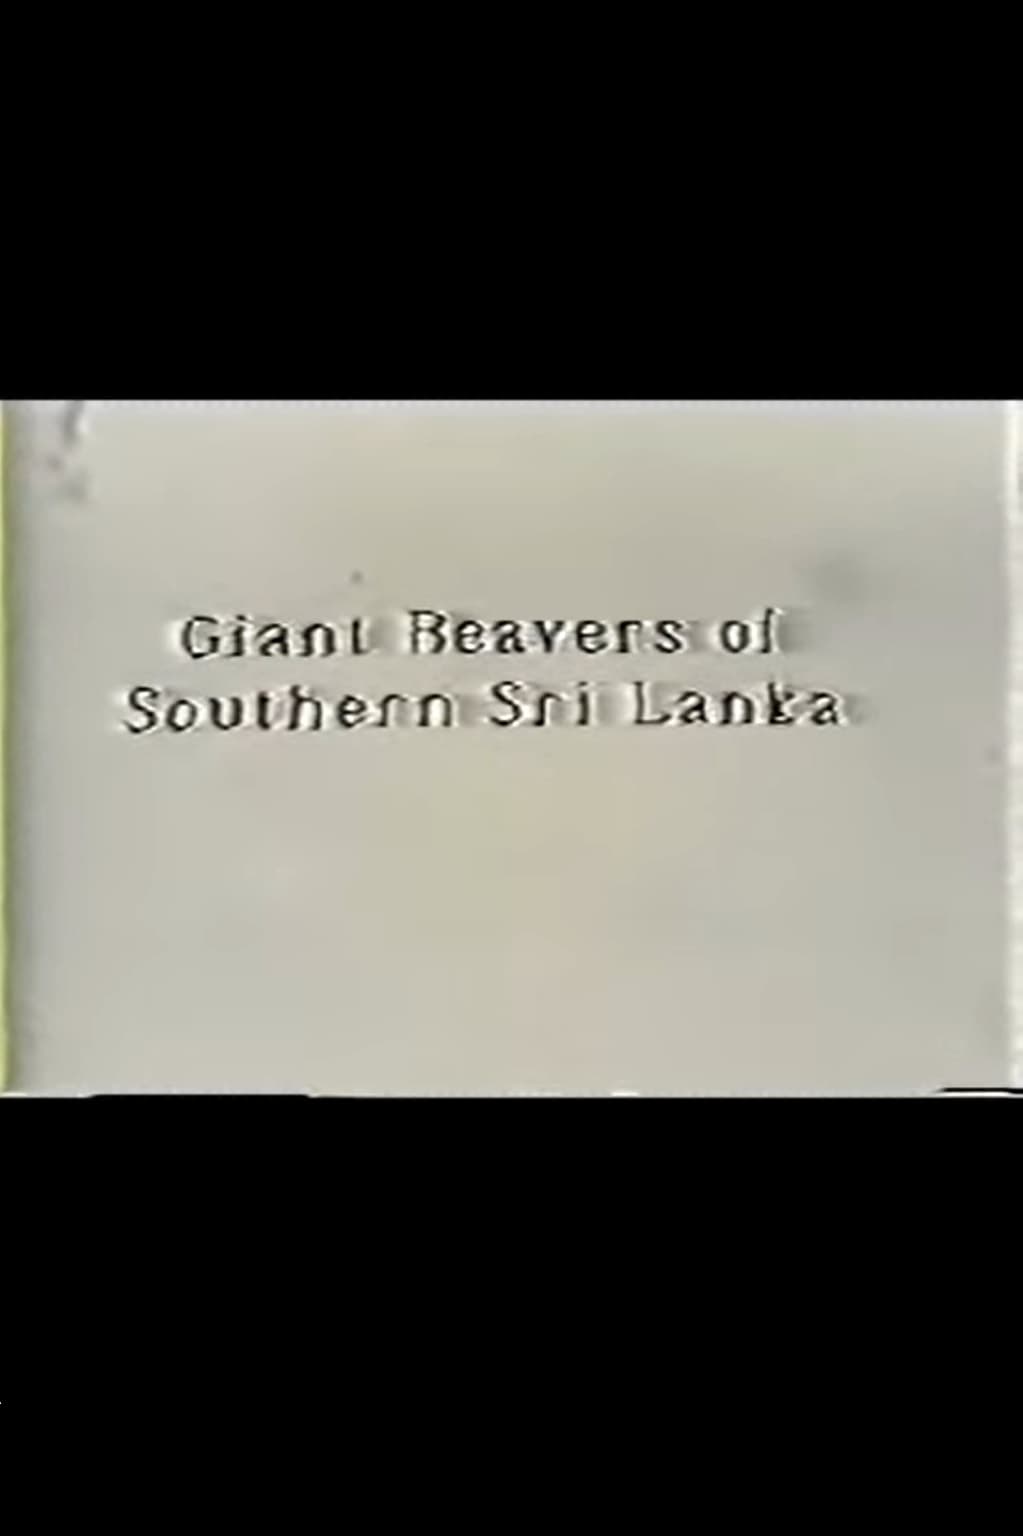 Giant Beavers of Southern Sri Lanka